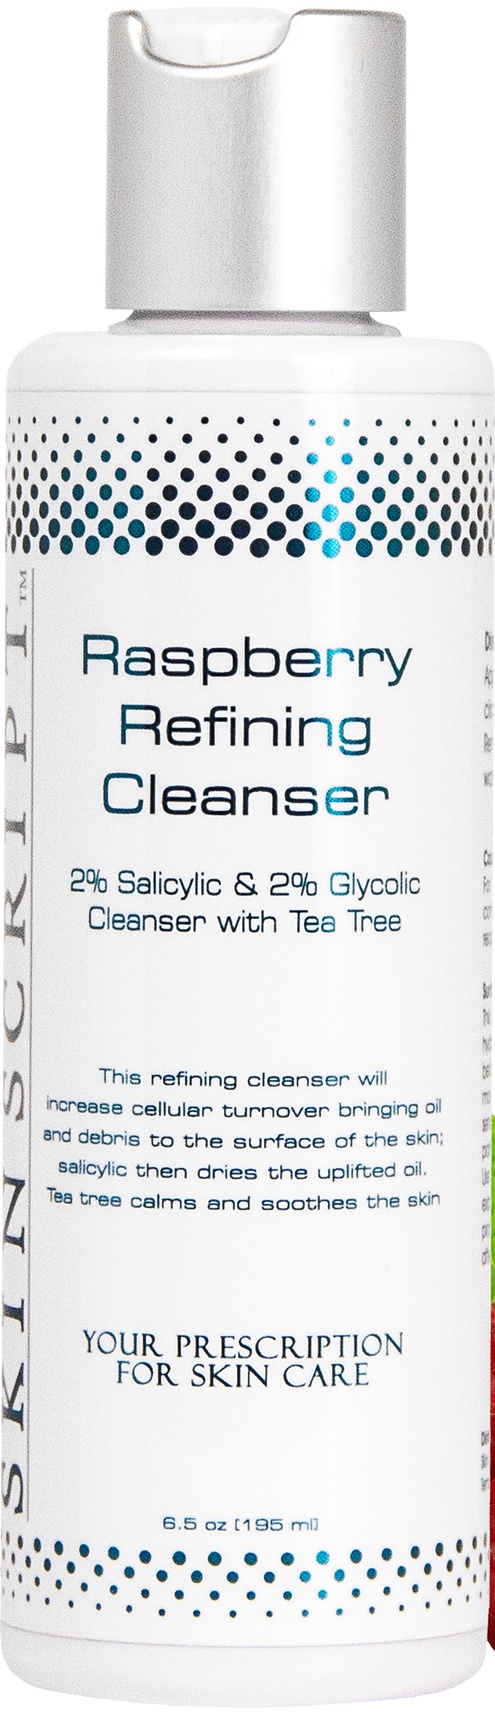 SkinScript Rx Raspberry Refining Cleanser